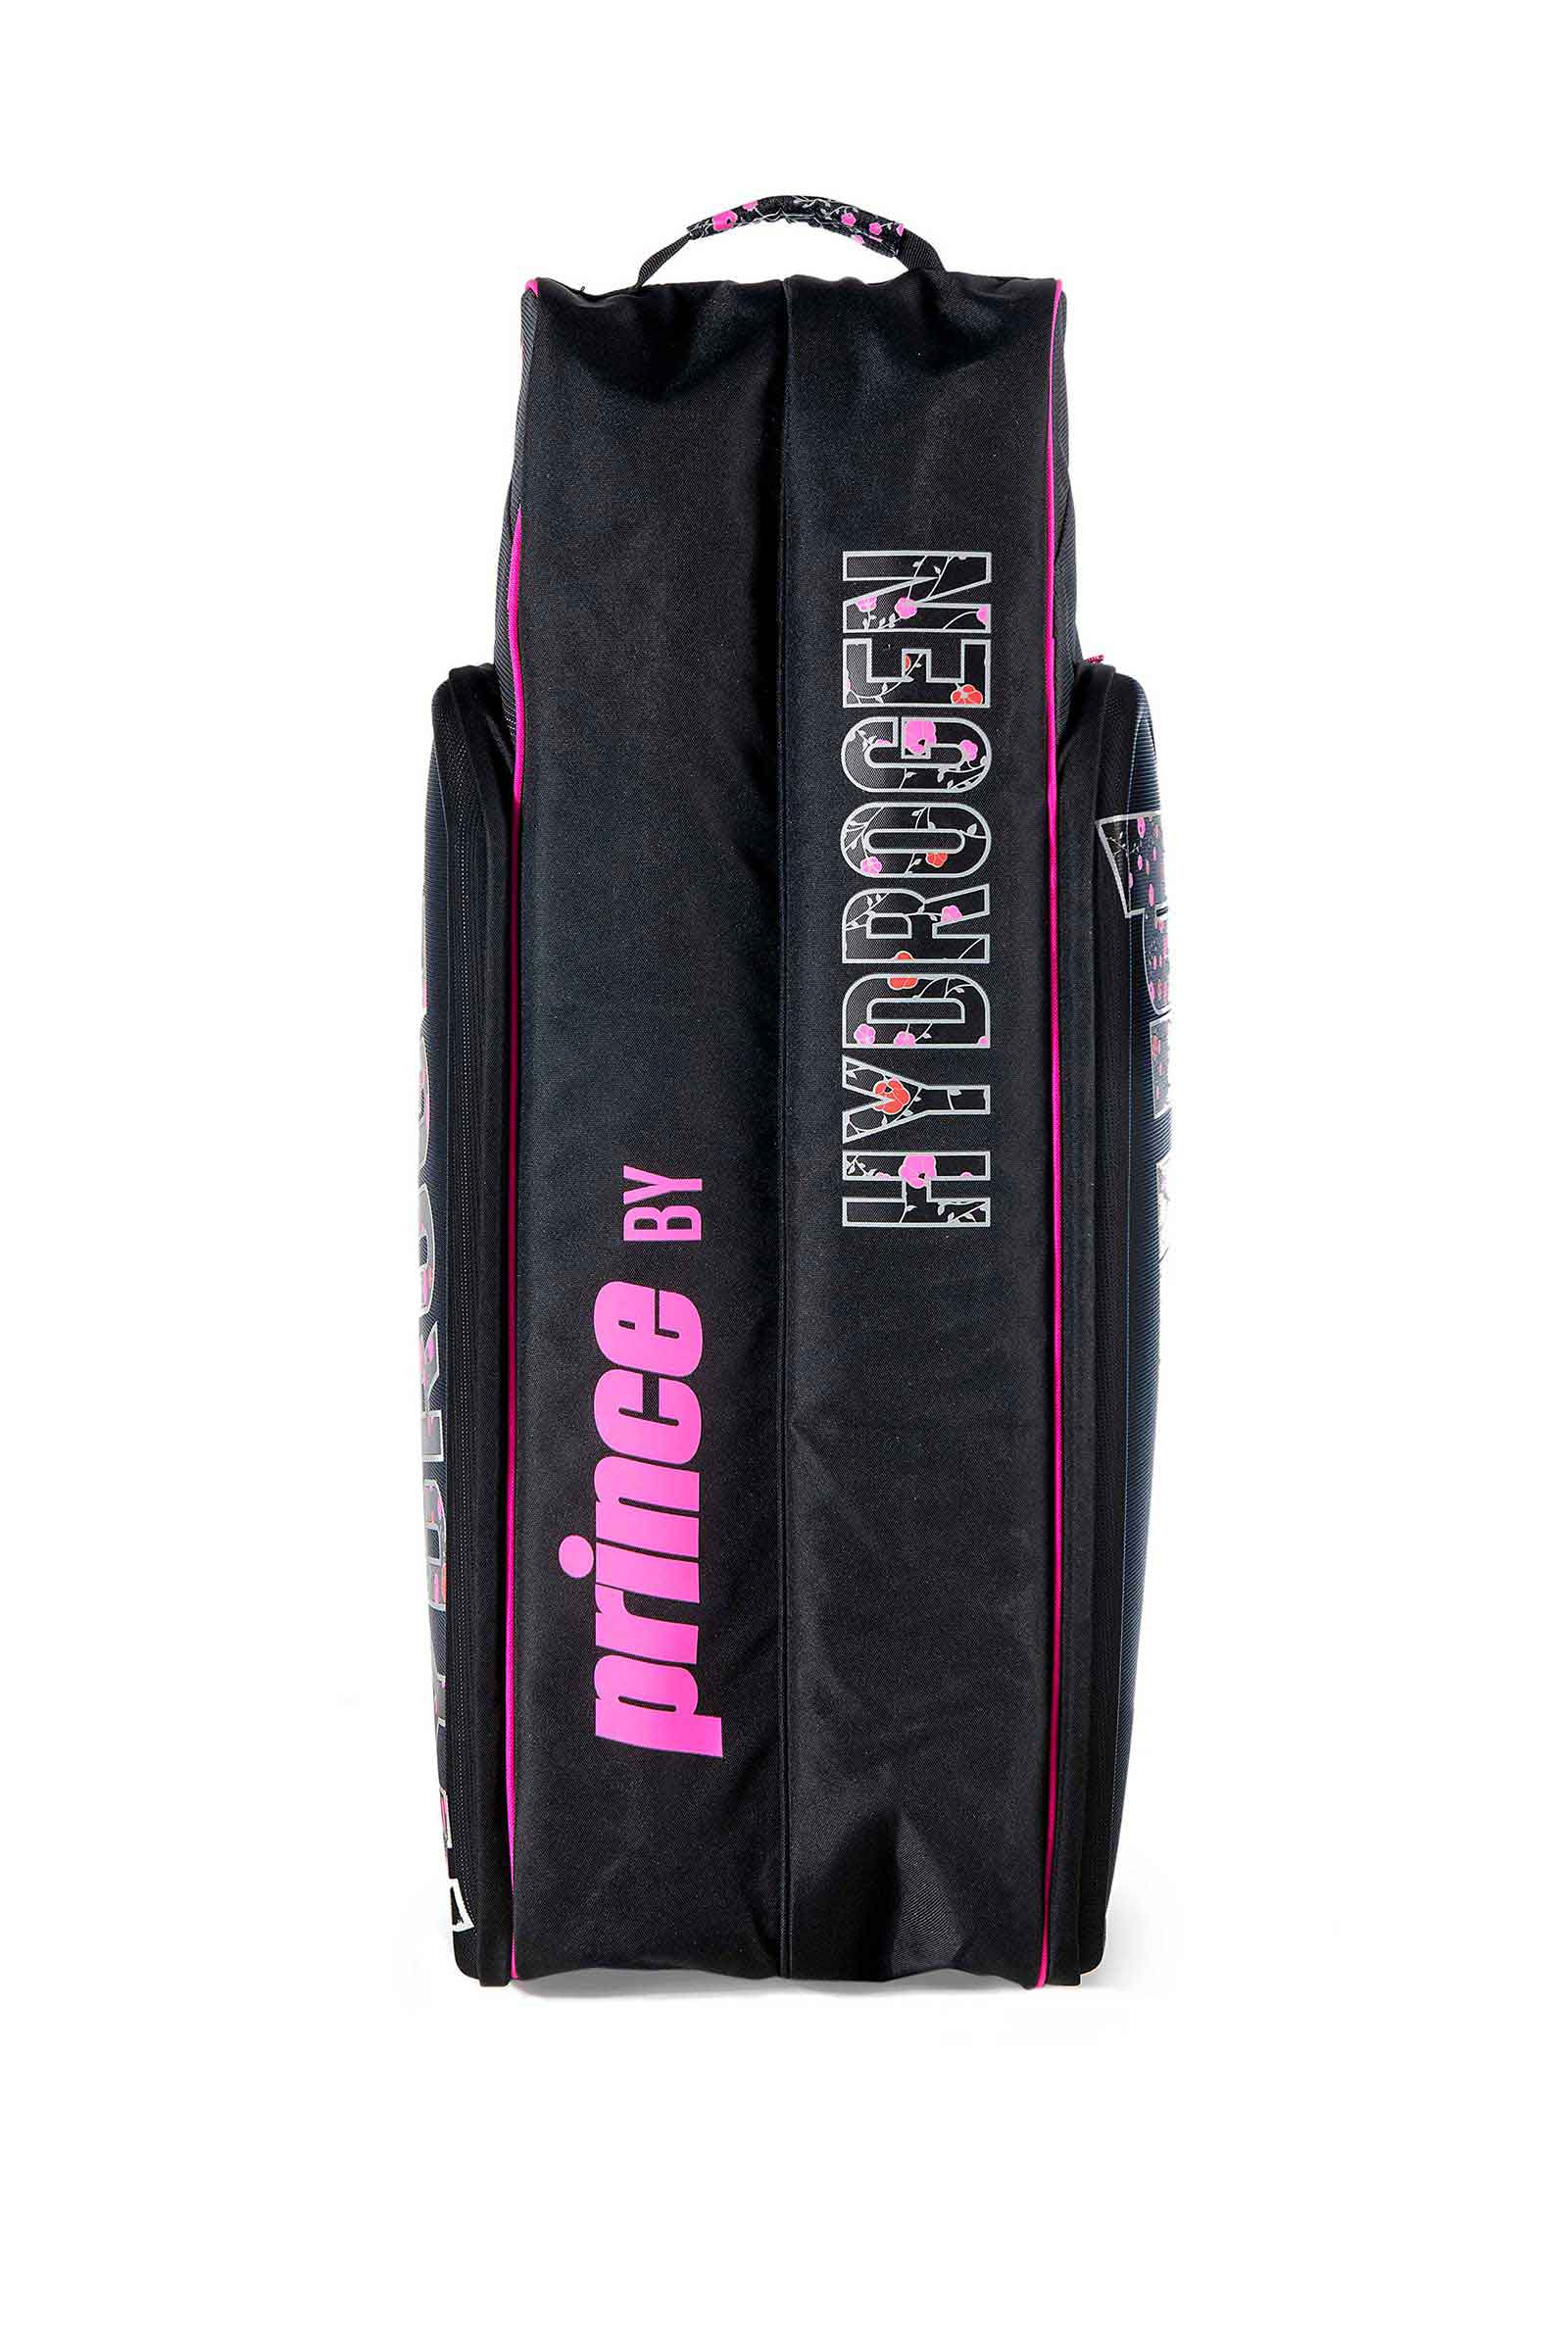 LADY MARY 9 RACKETS BAG PRINCE BY HYDROGEN - BLACK,FUCHSIA FLUO - Hydrogen - Luxury Sportwear